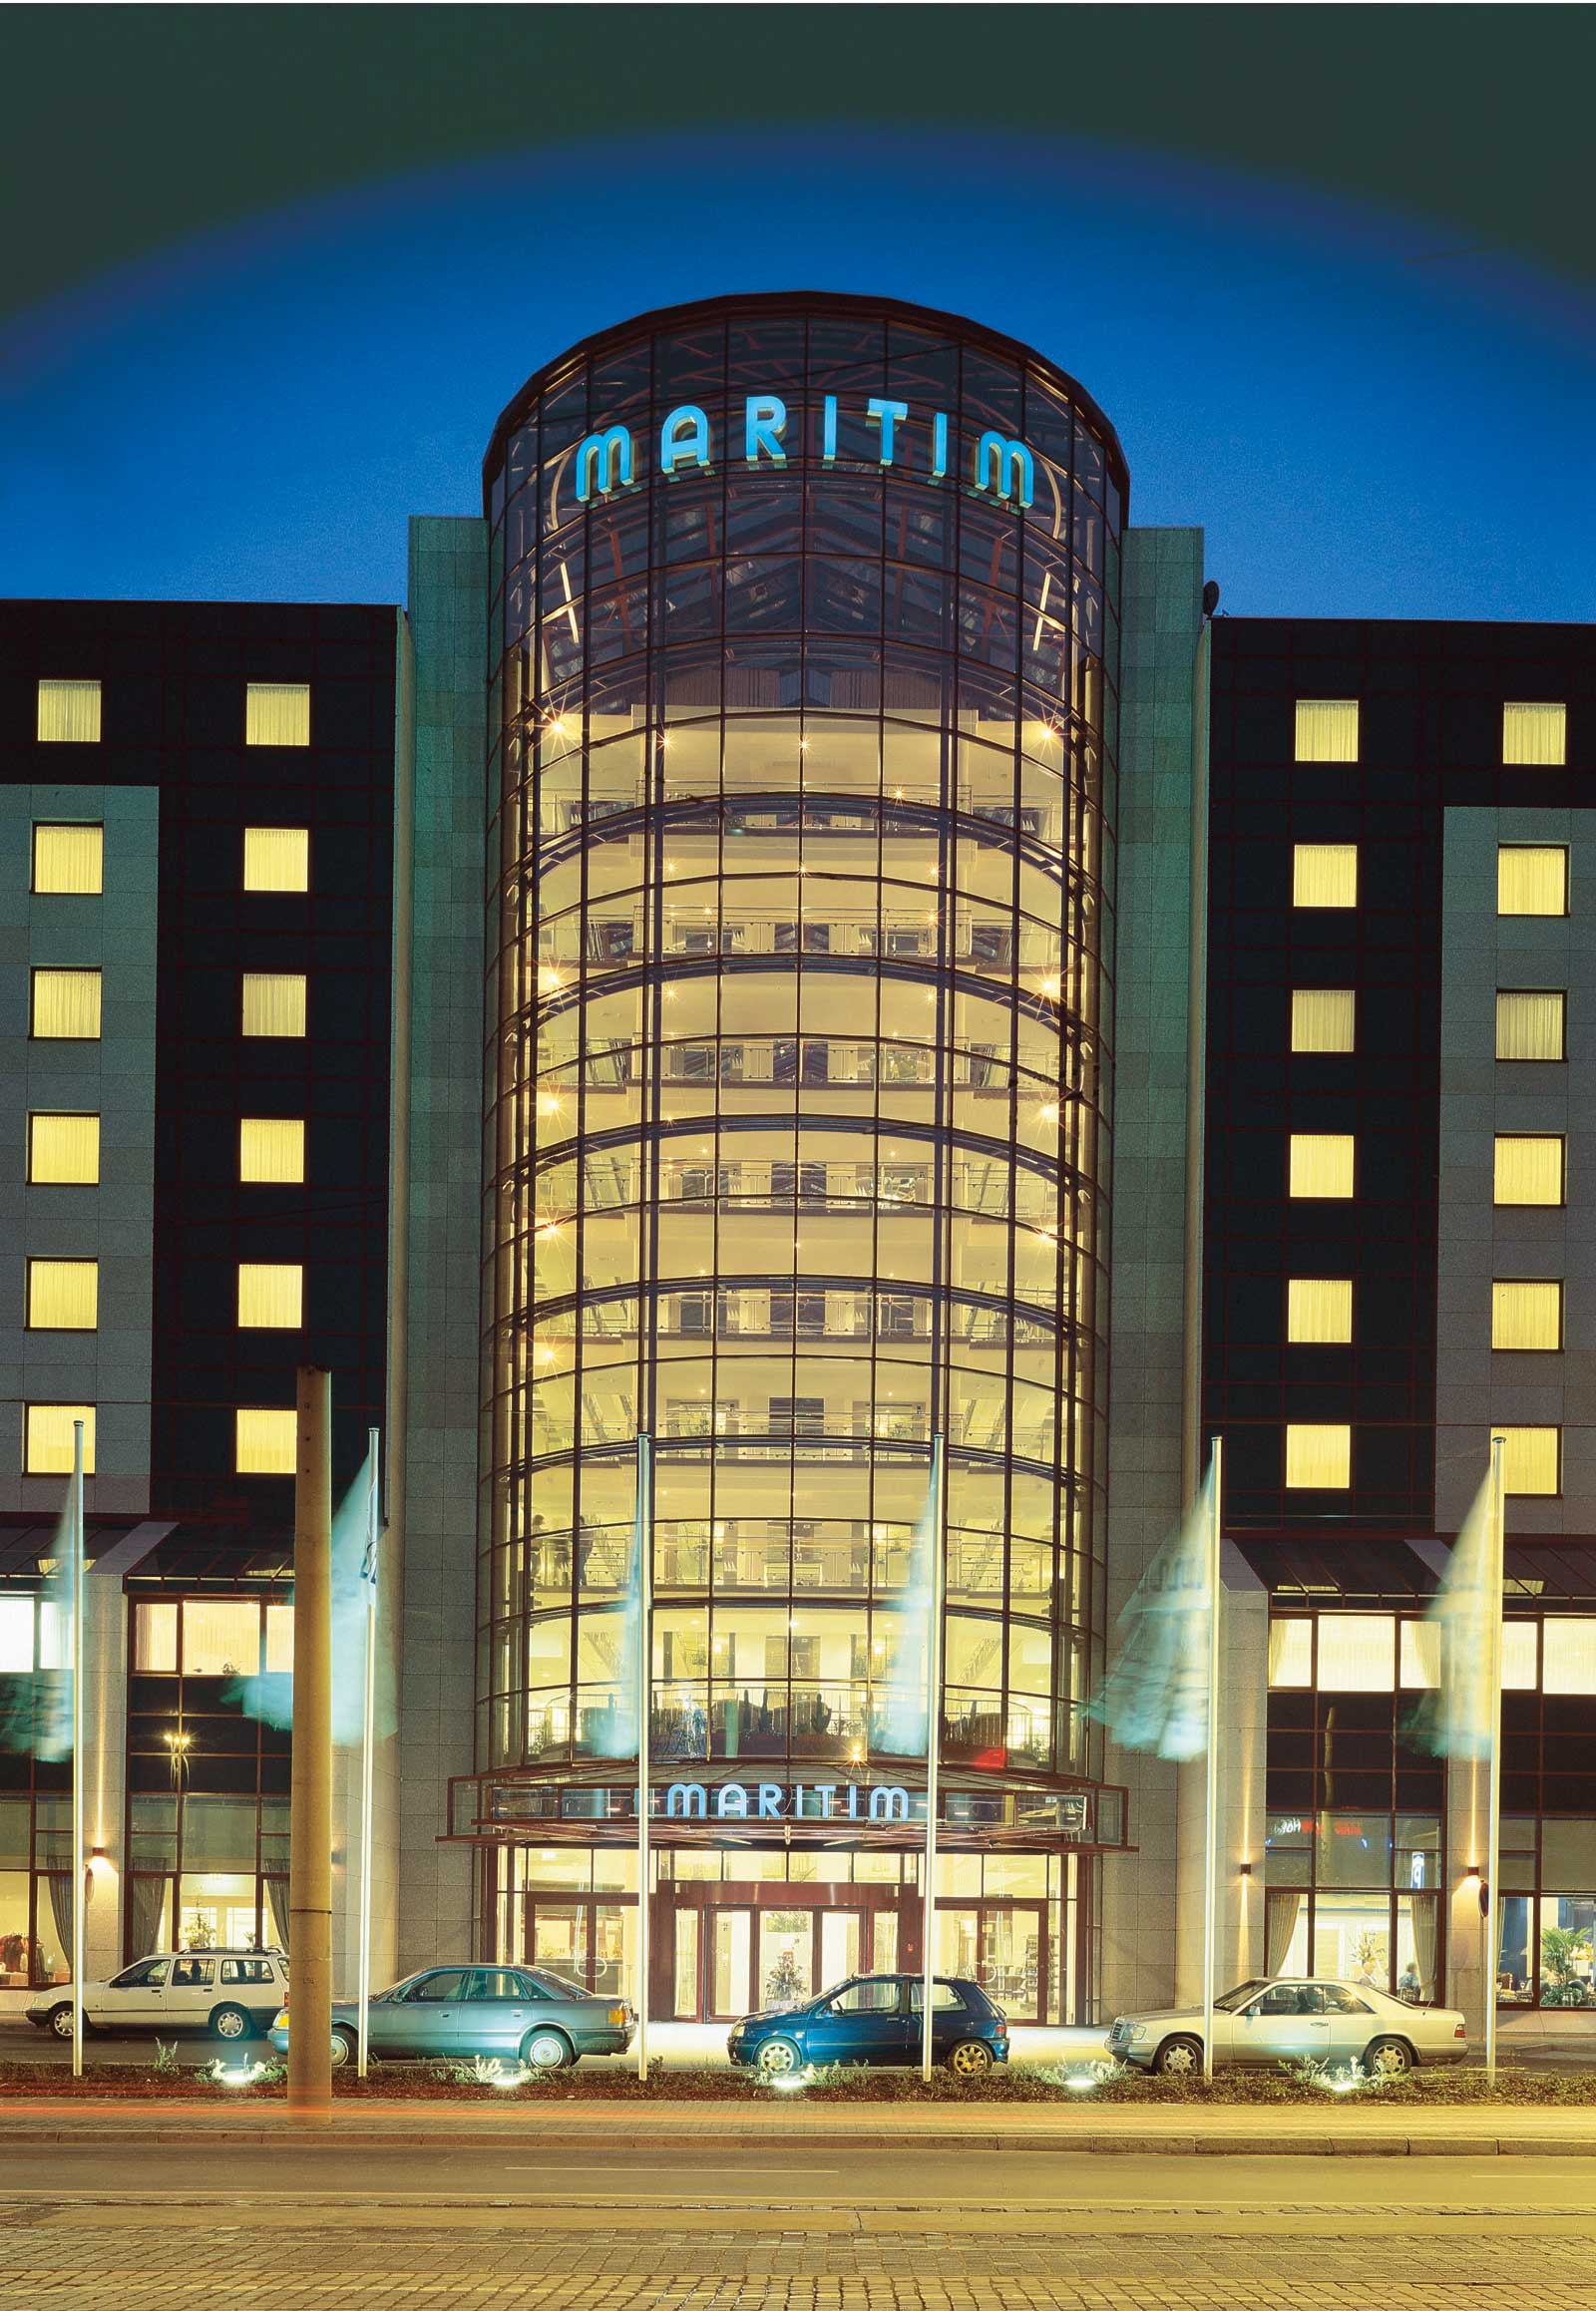 Maritim Hotel, Magdeburg.
